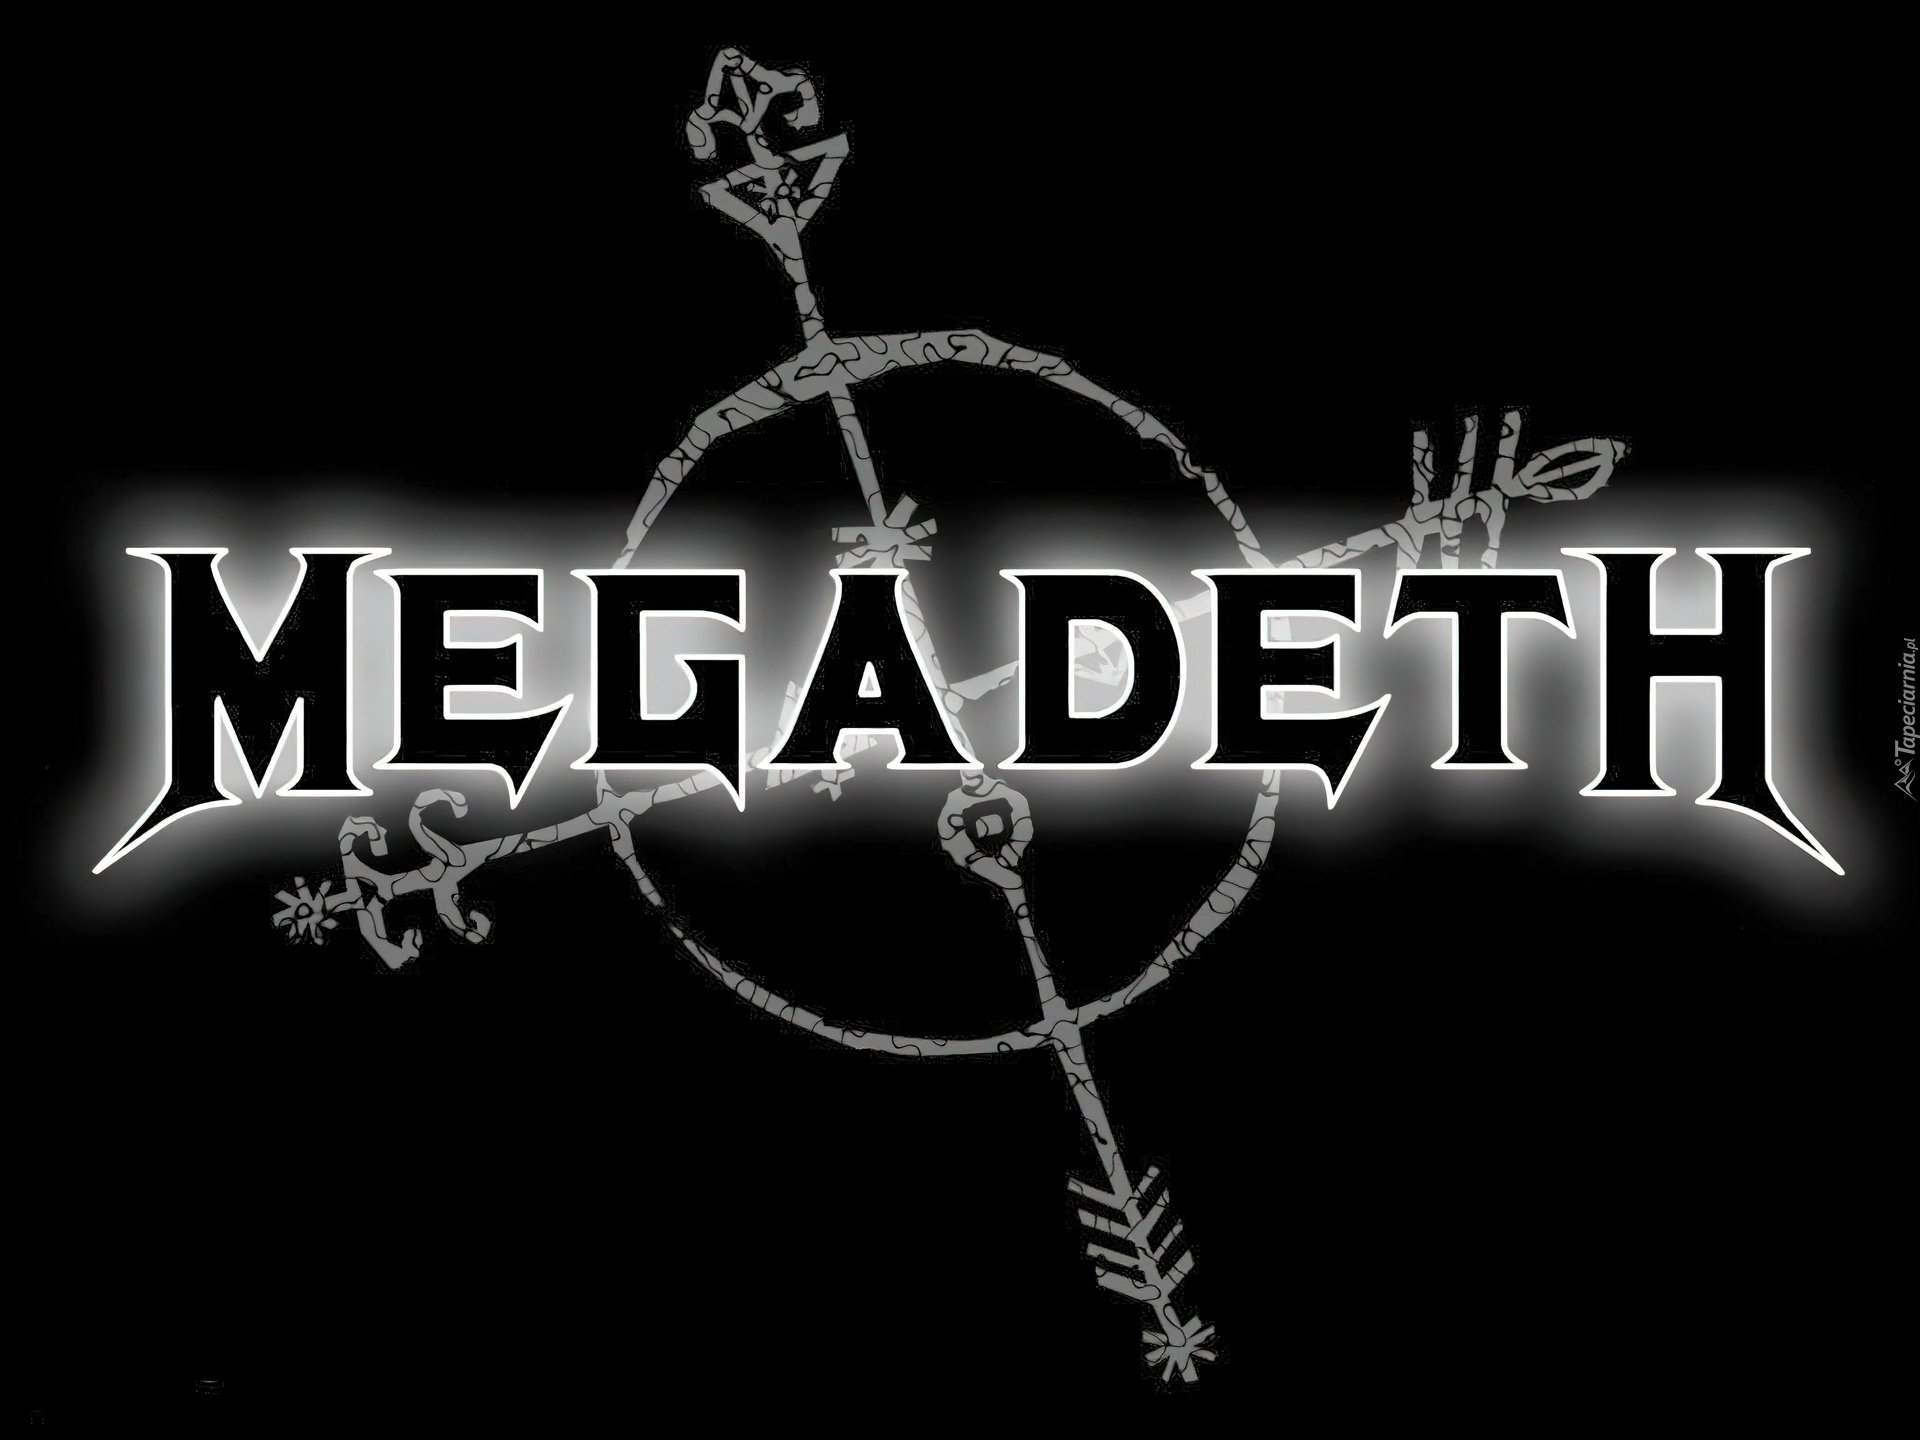 Logo, Megadeth